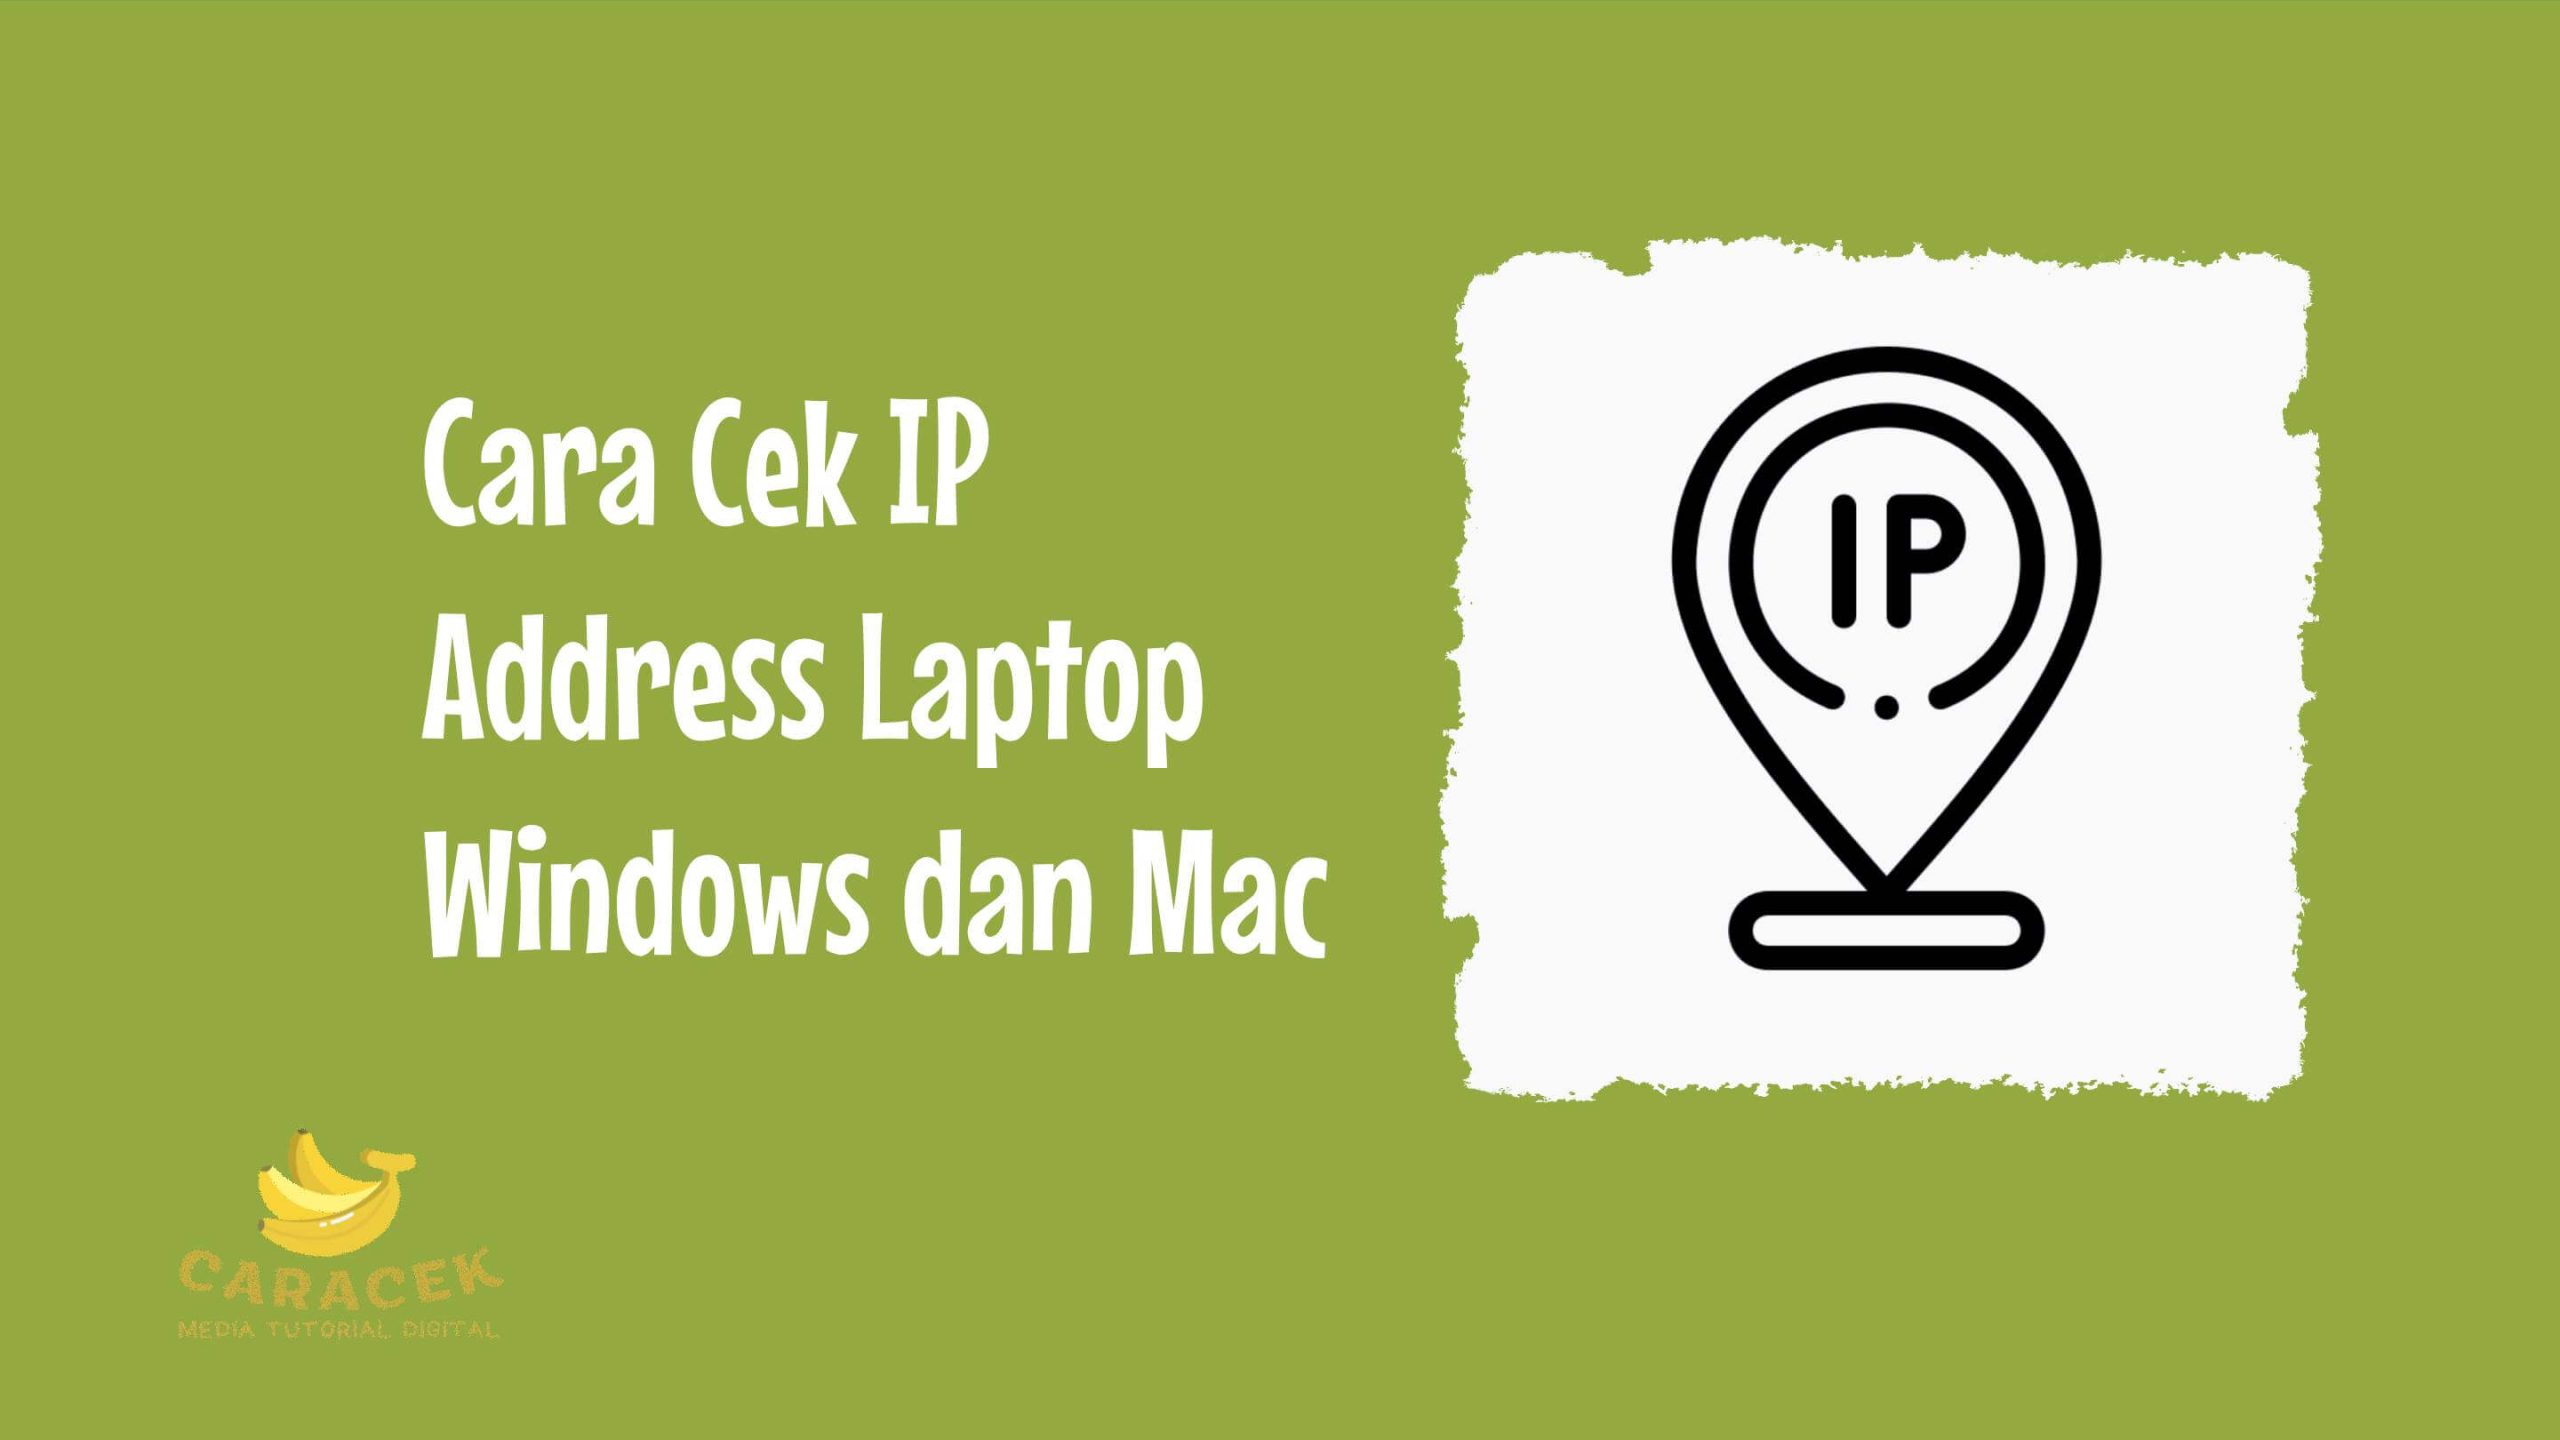 Cara Cek IP Address Laptop